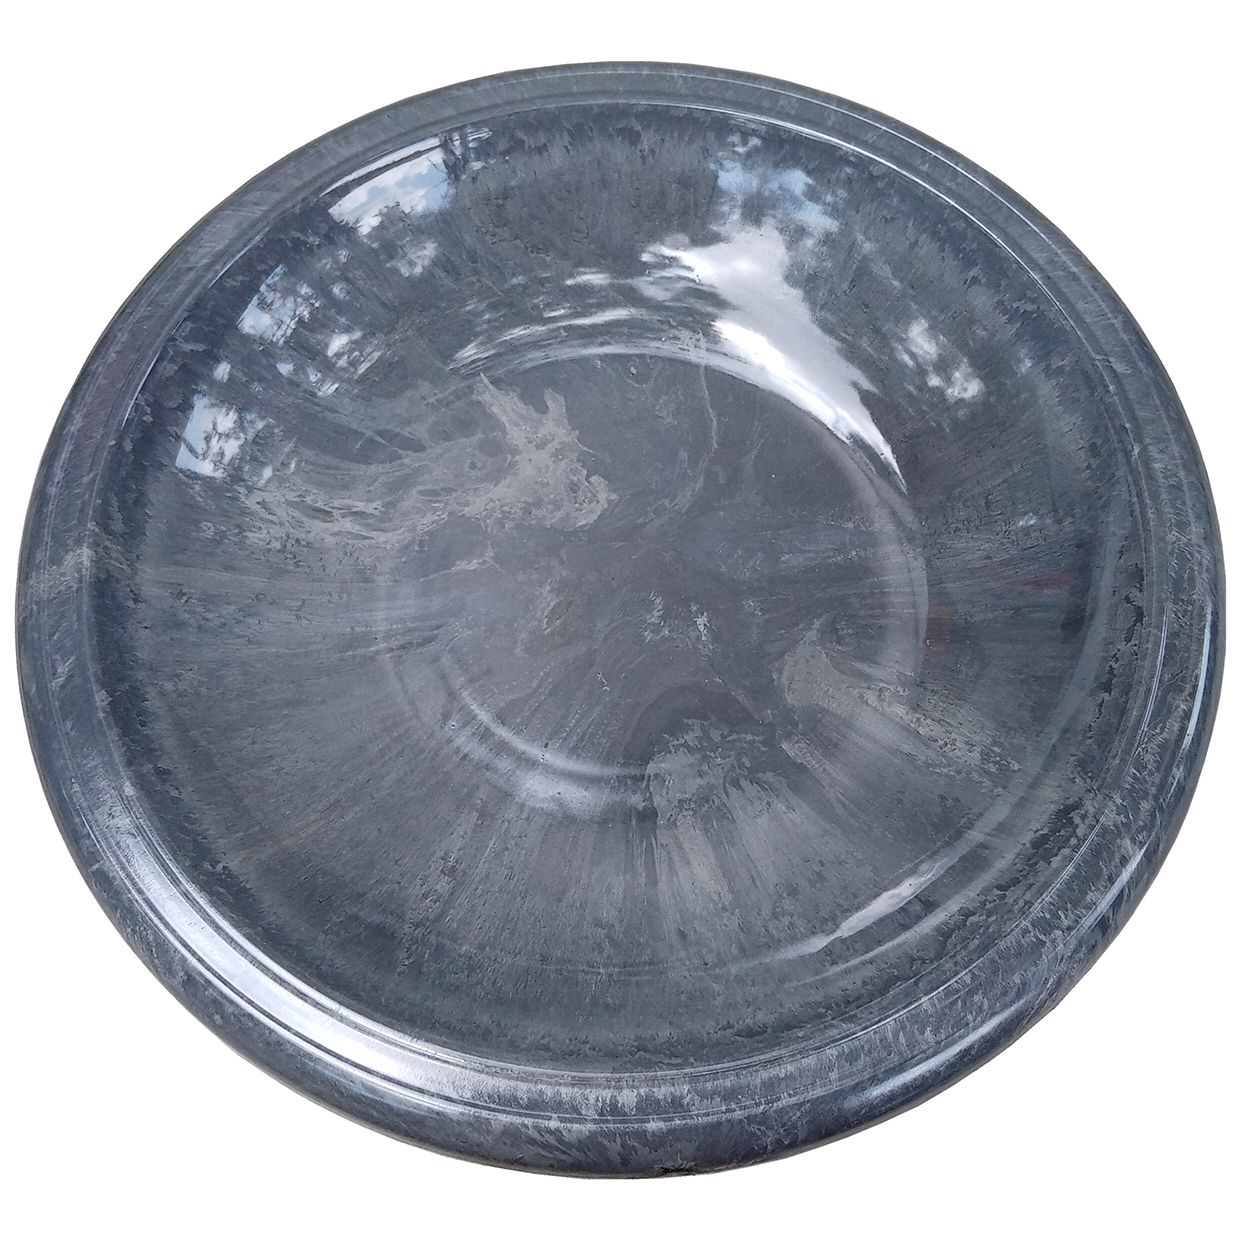 Tdi41895t Gloss Bird Bowl With Rim, Cool Grey